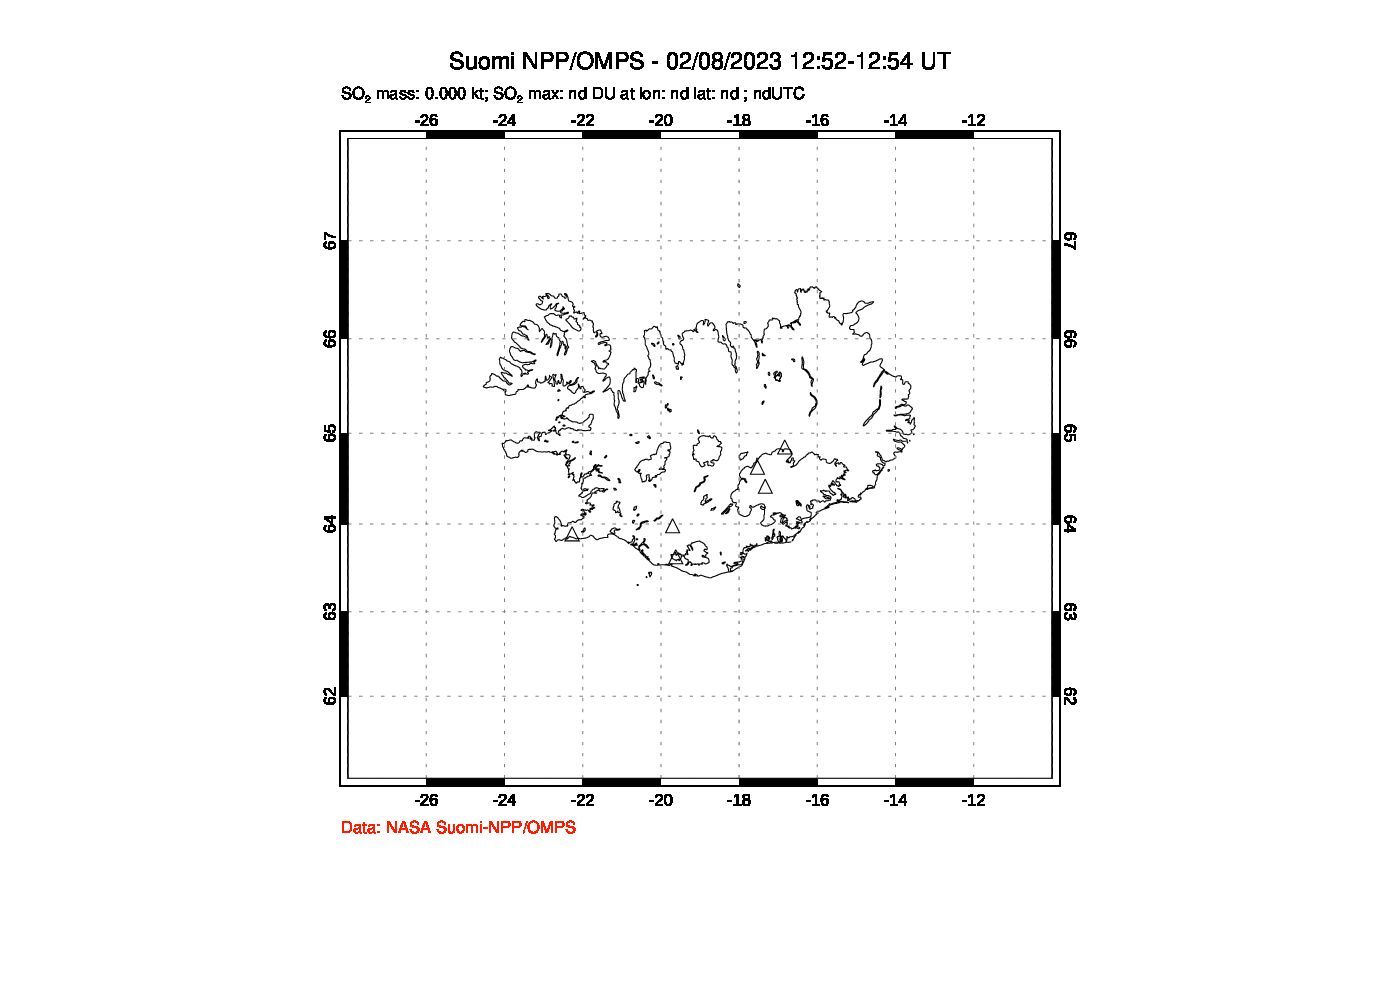 A sulfur dioxide image over Iceland on Feb 08, 2023.